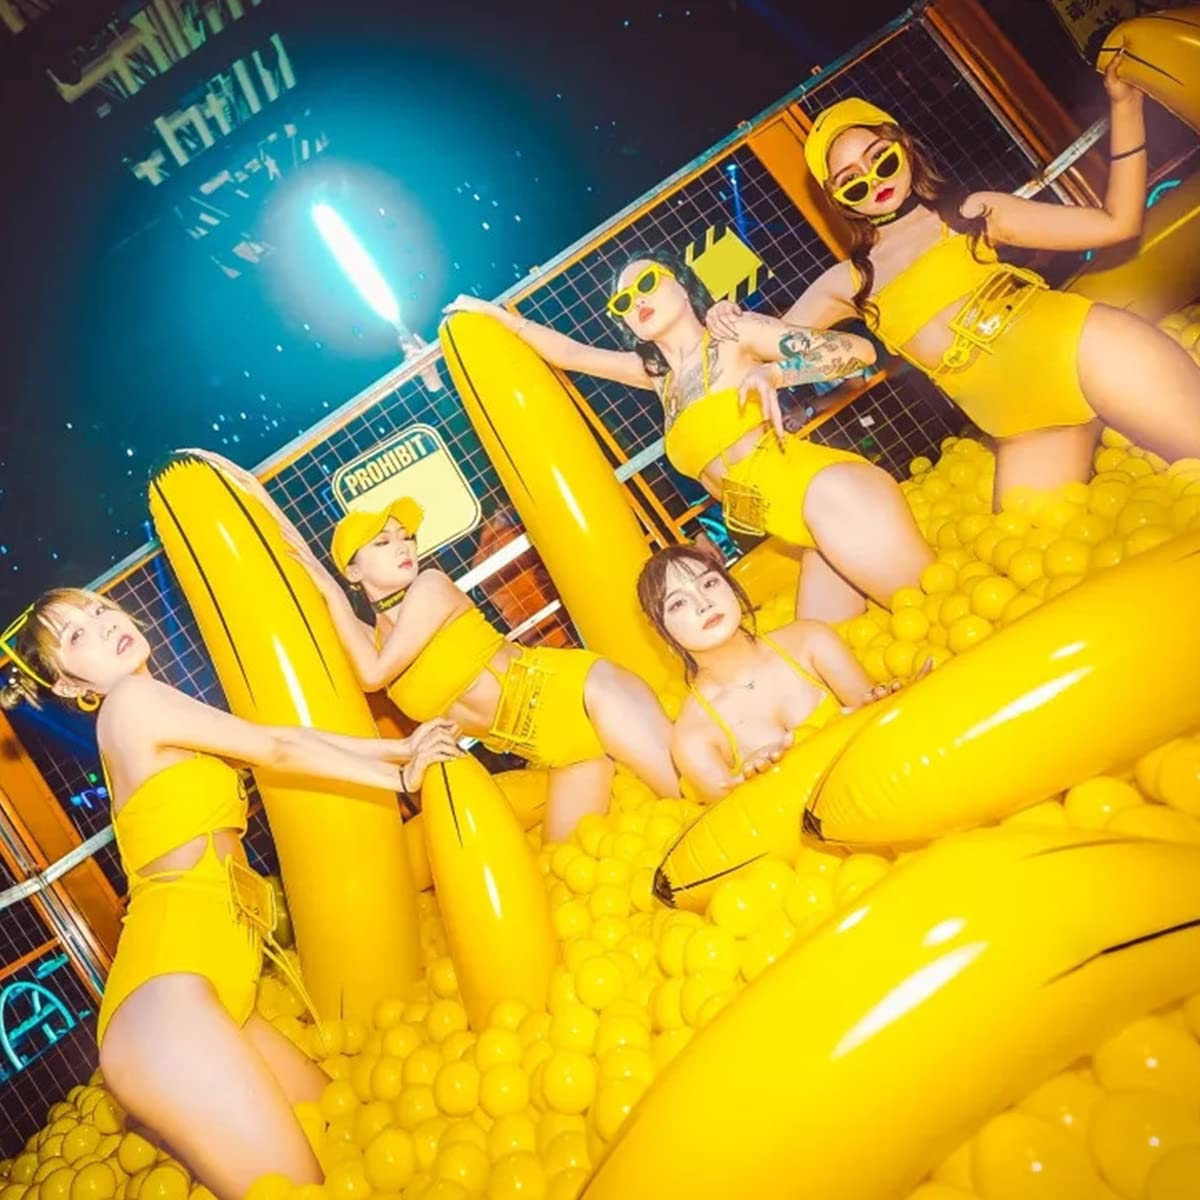 6 Pcs Bachelorette Party Game Inflatable Banana Props Balloons,Include 70 Inch Banana x 1,23 Inch Banana x 5,for Indoor and Outdoor Bachelorette Party Decoration Supplies